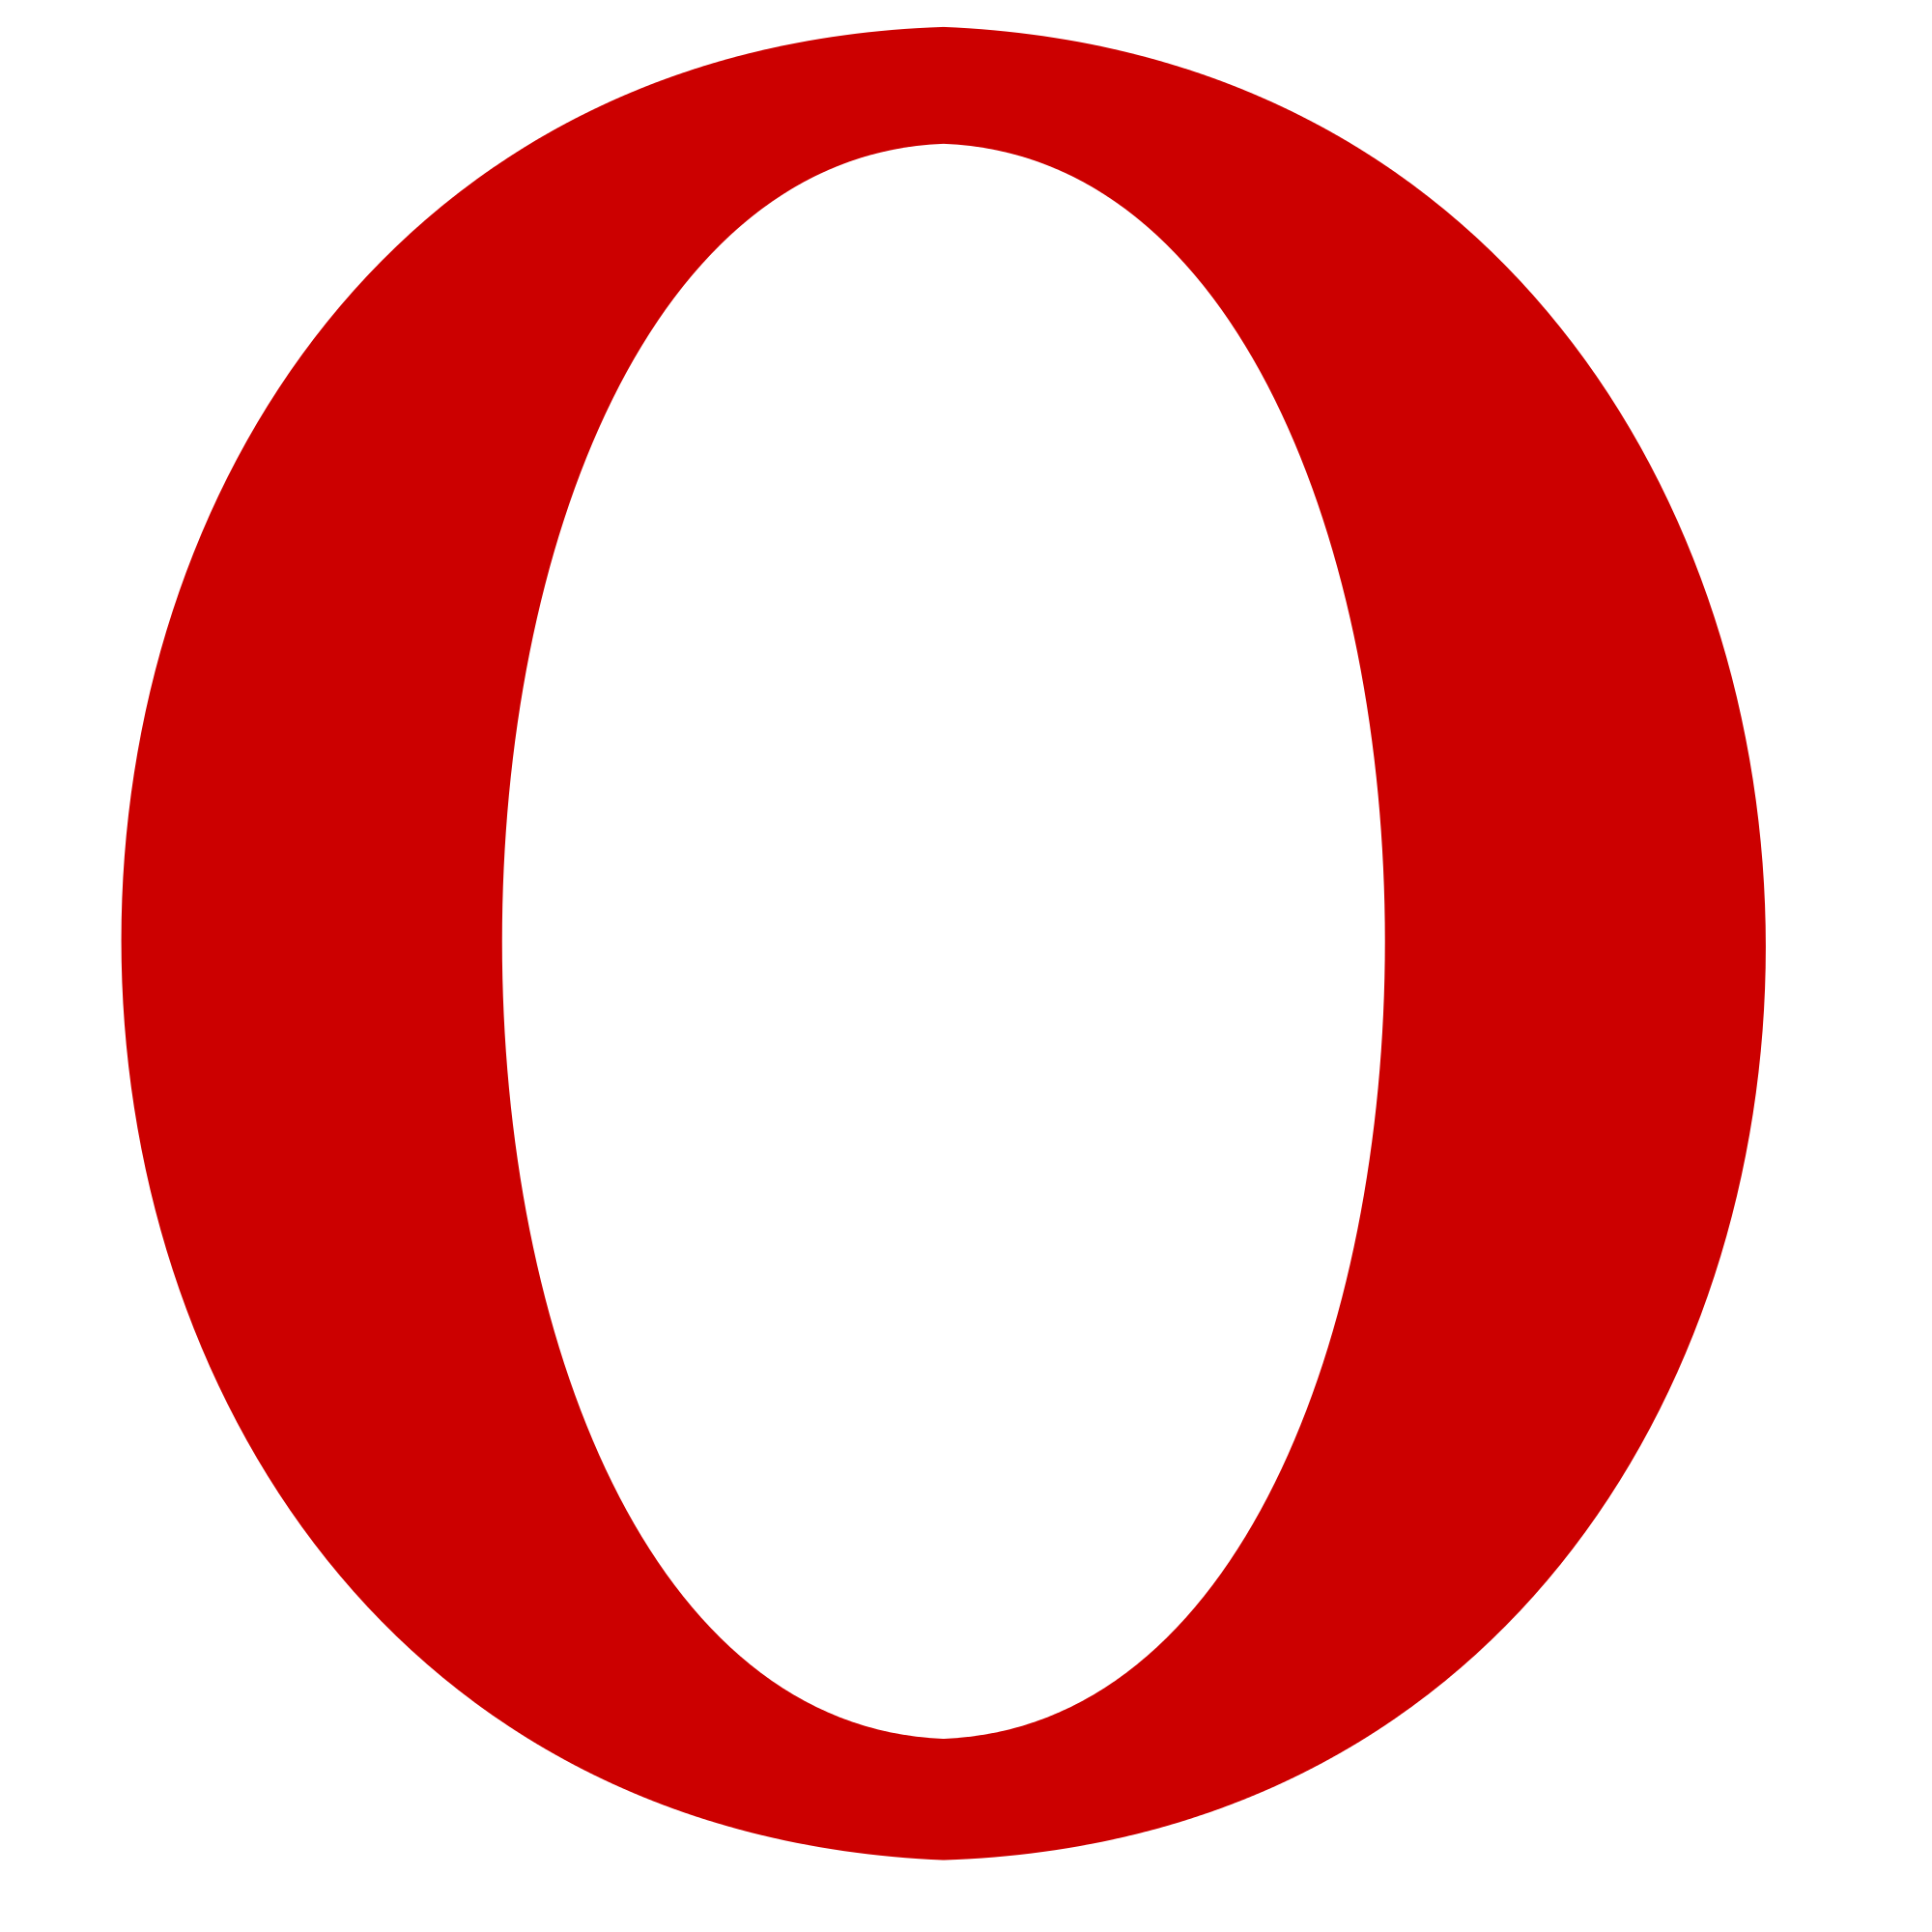 La lettre O